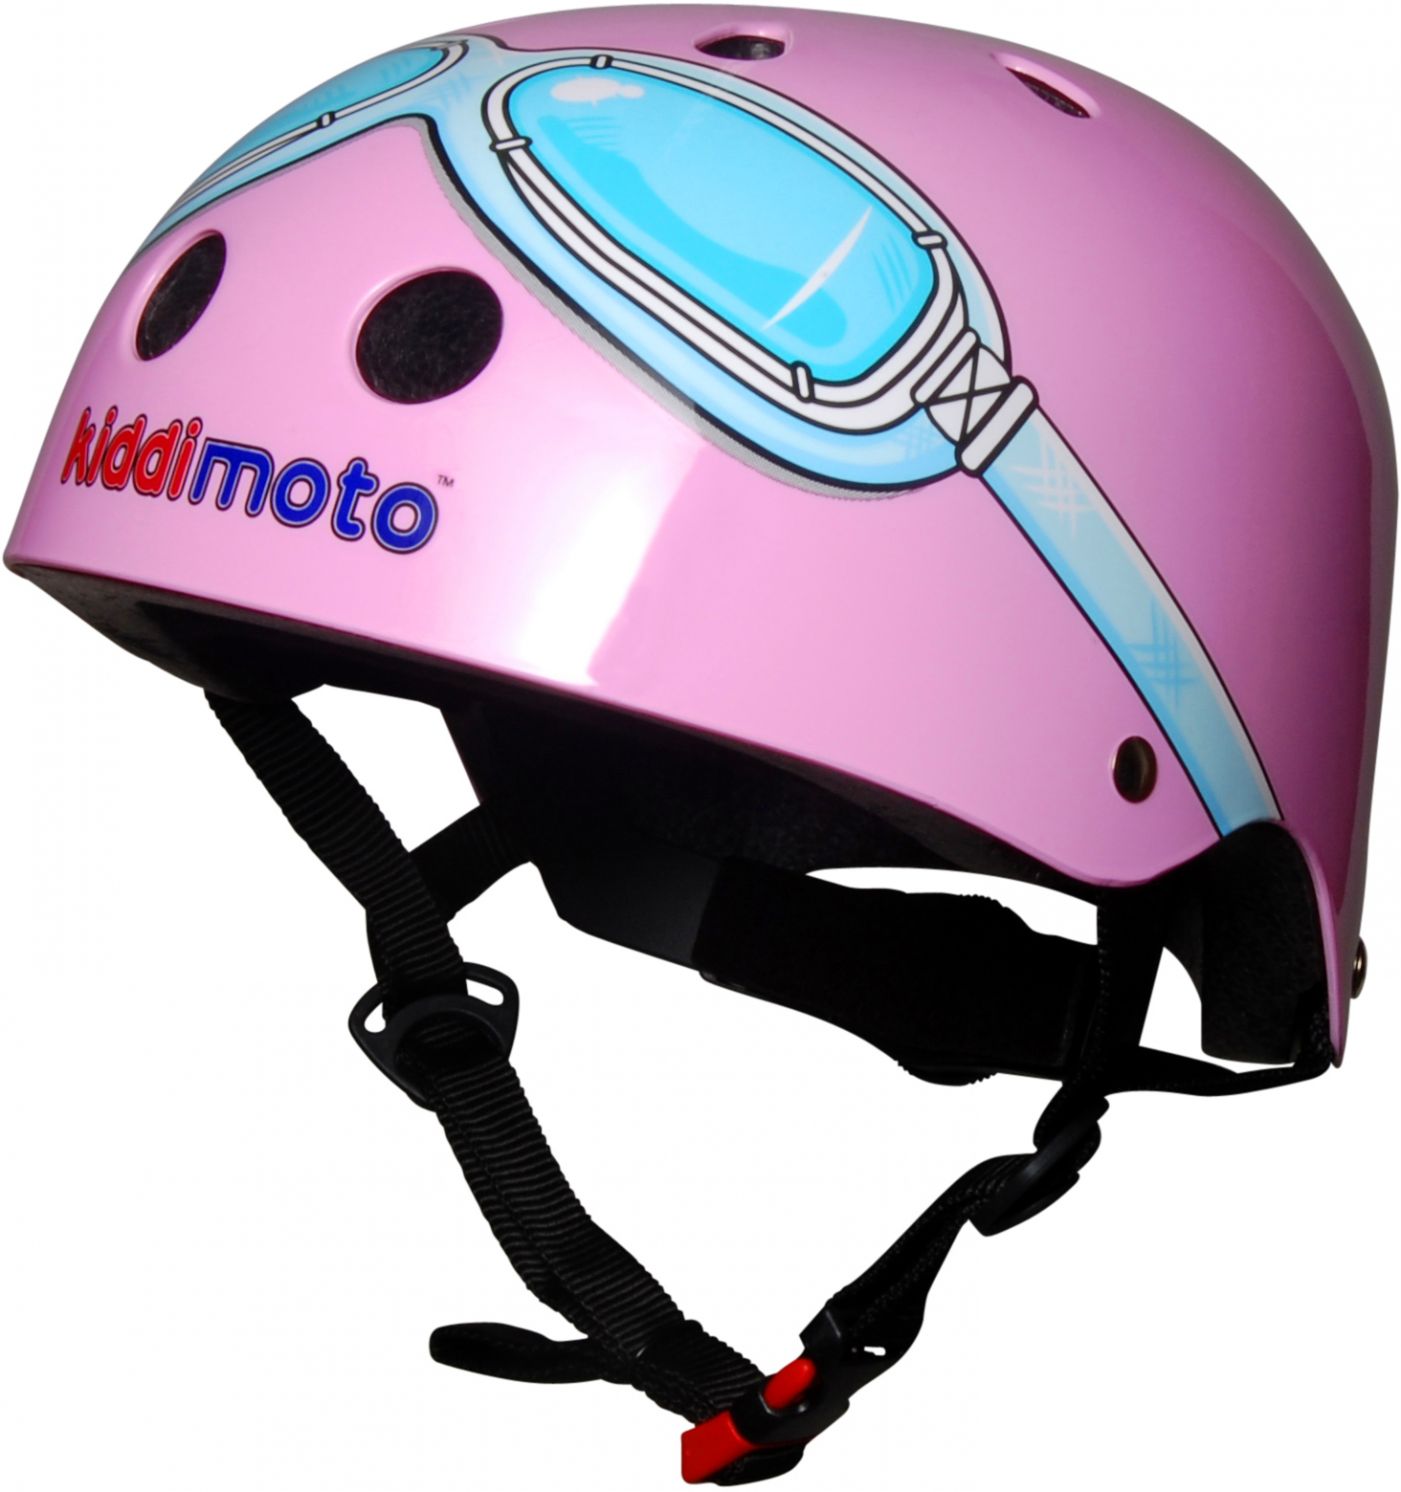 Шлем детский Kiddimoto очки пилота, розовый, размер S 48-53см фото 1